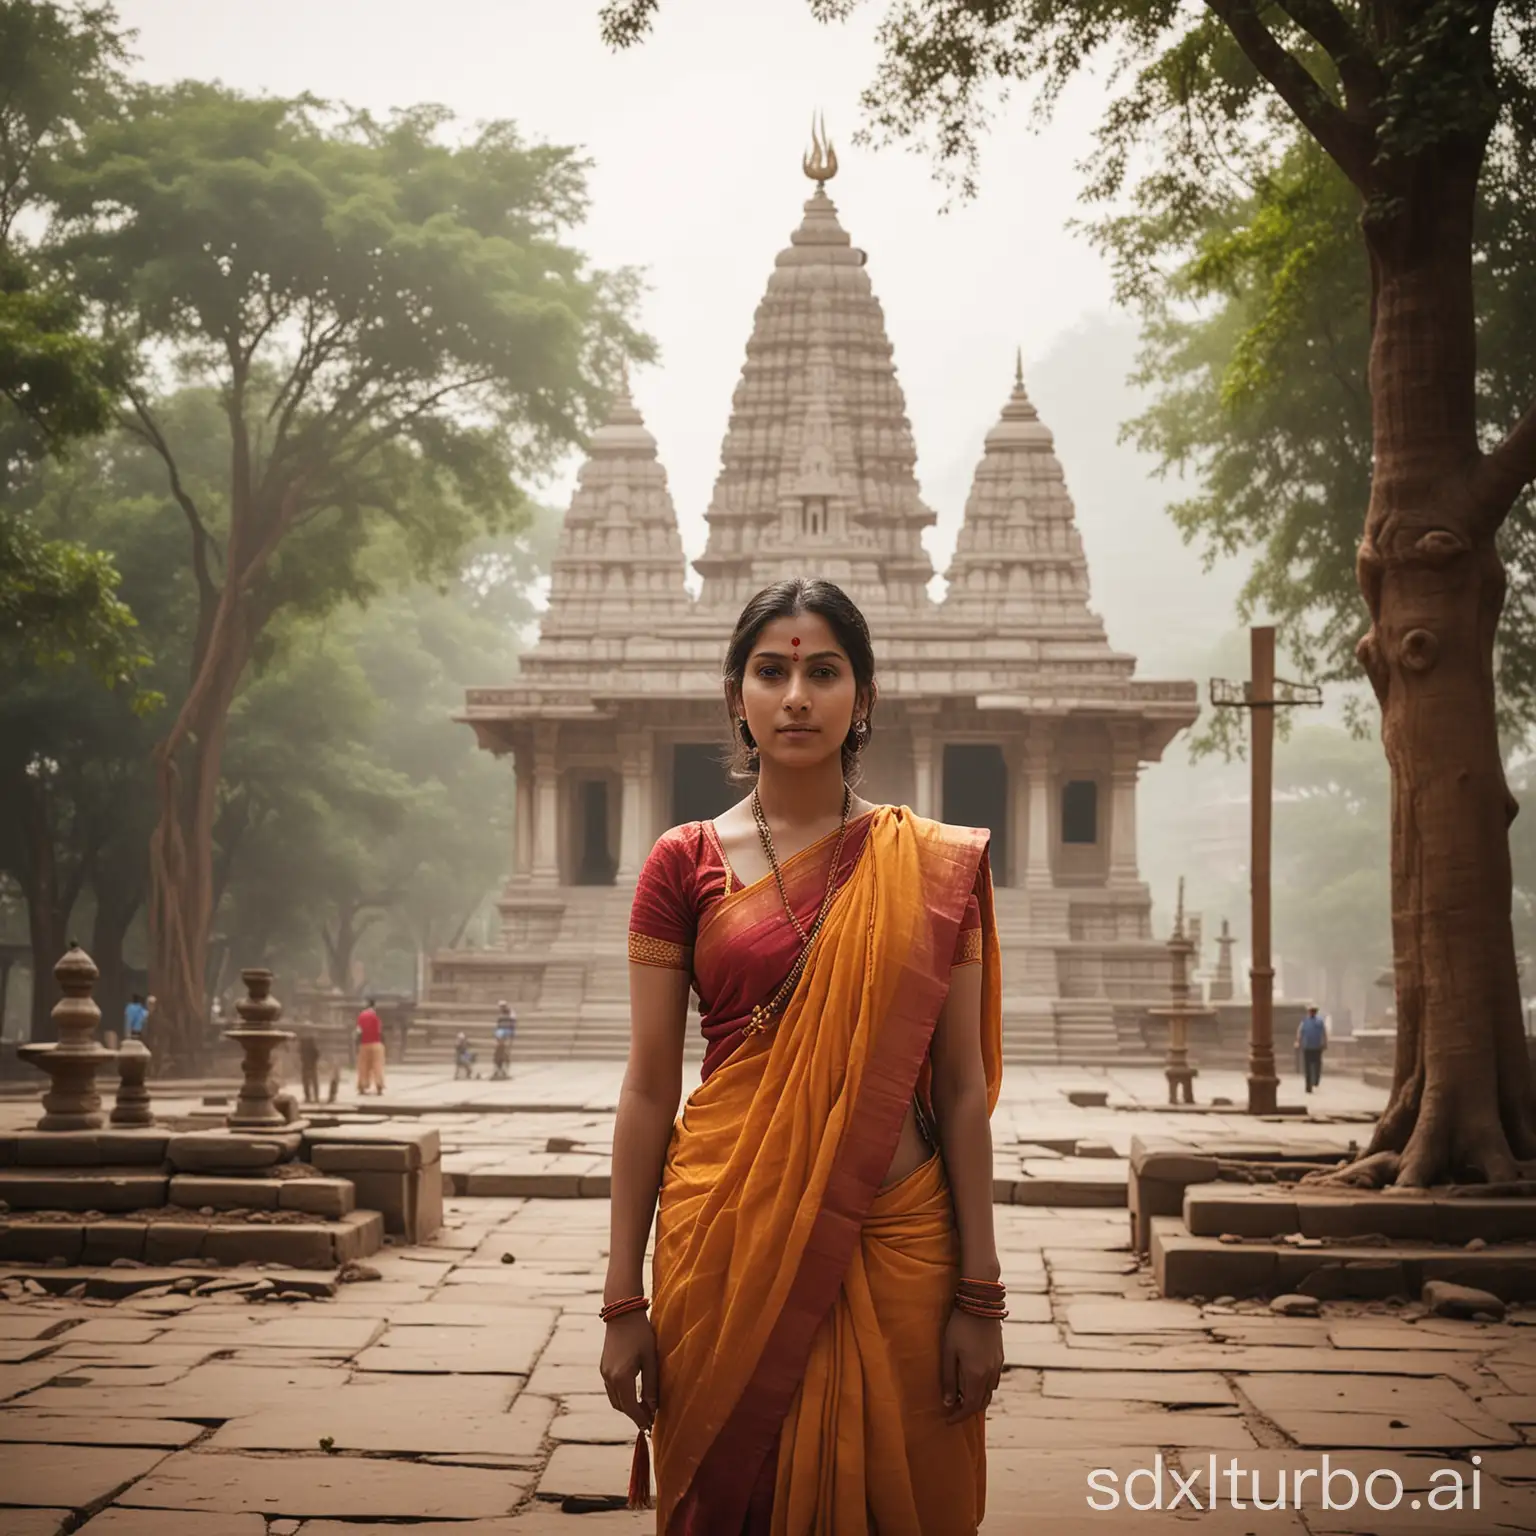 Serene-Sharda-Maa-Temple-Scene-in-India